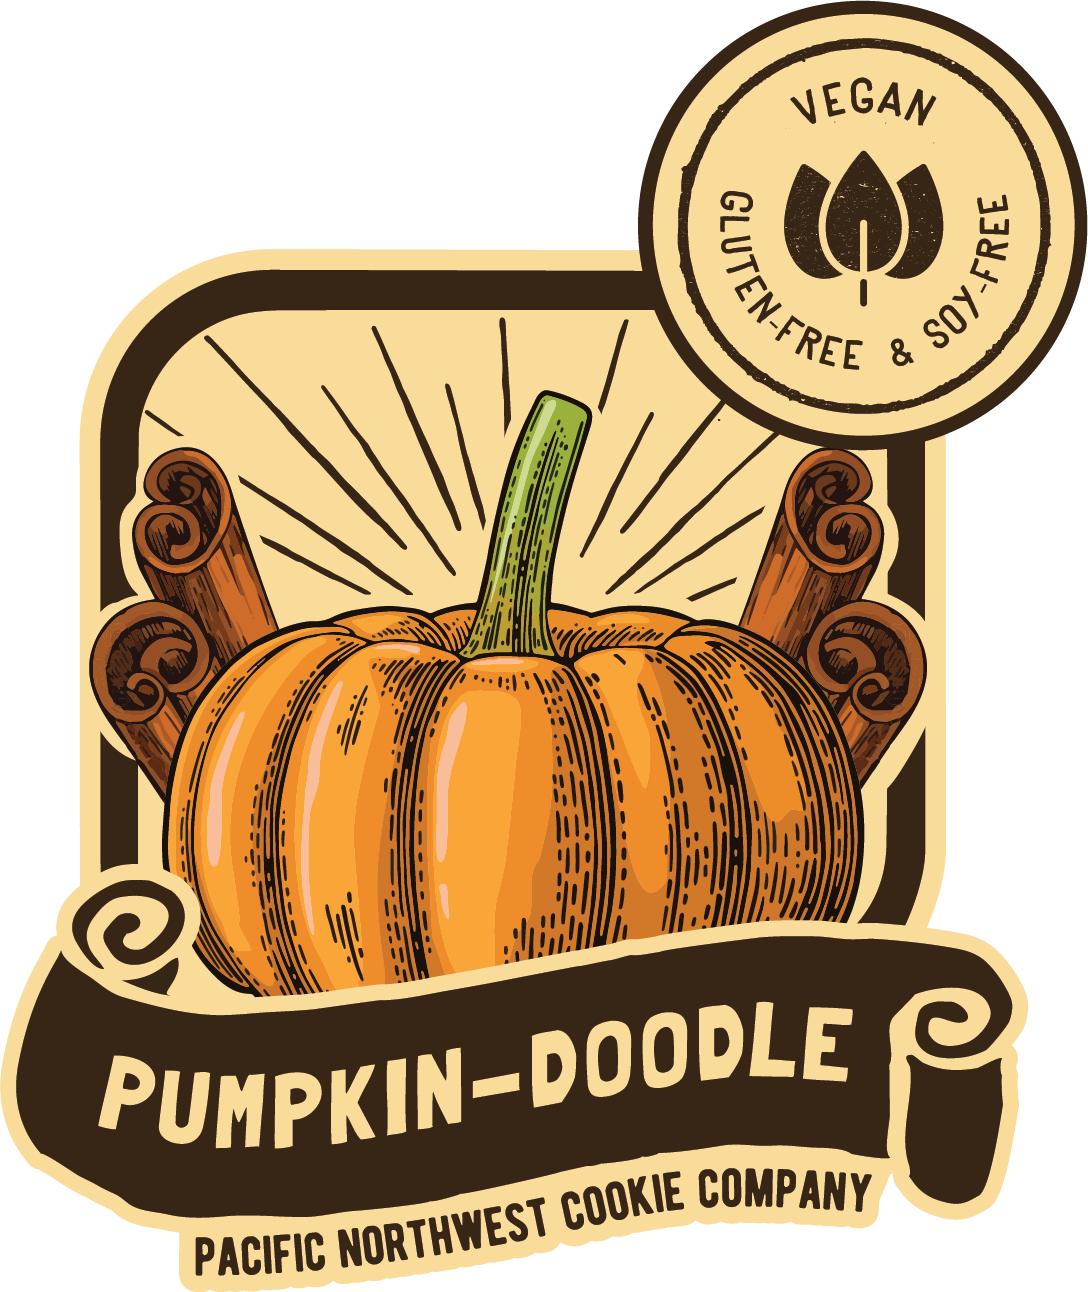 The Pumpkin-Doodle | Seasonal Edition